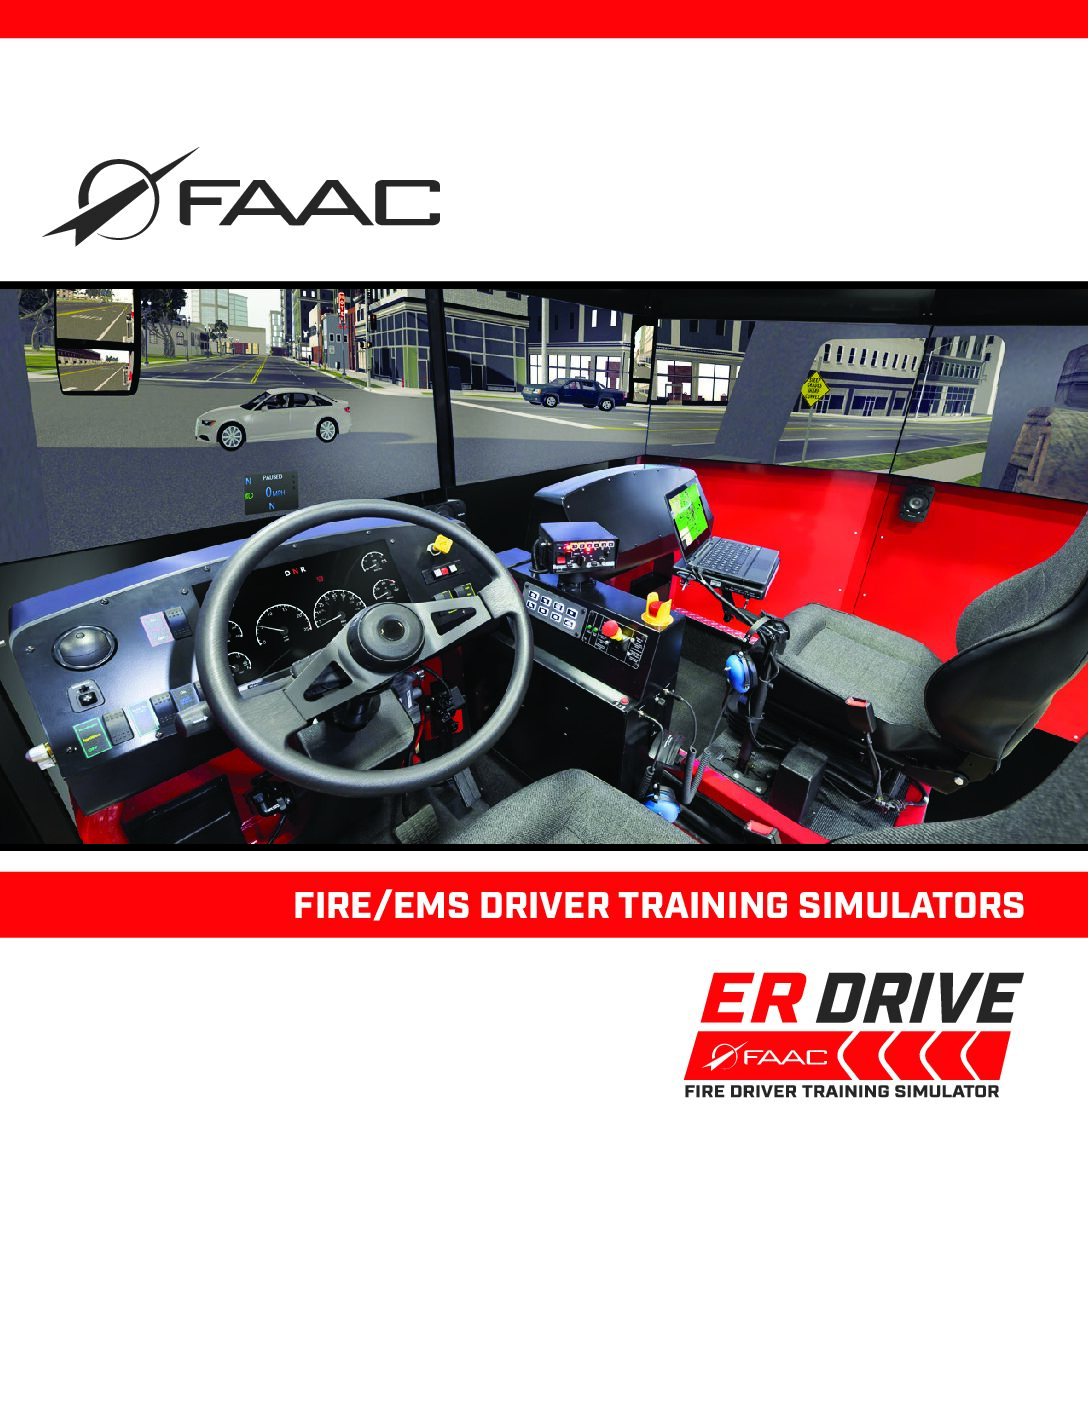 FAAC Fire Driving Simulators Brochure